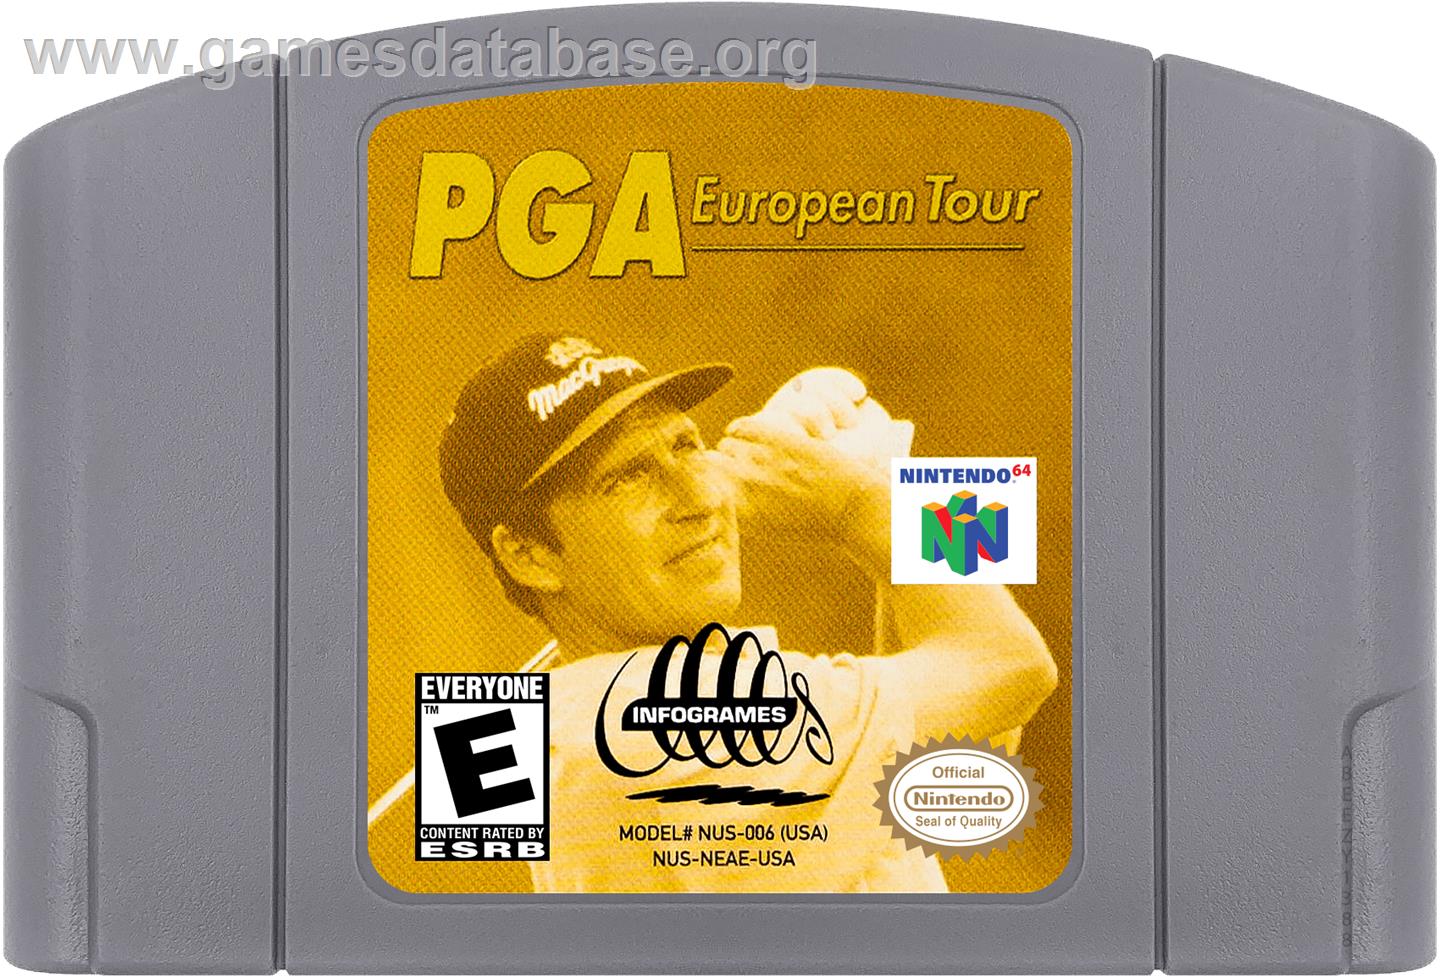 PGA European Tour - Nintendo N64 - Artwork - Cartridge